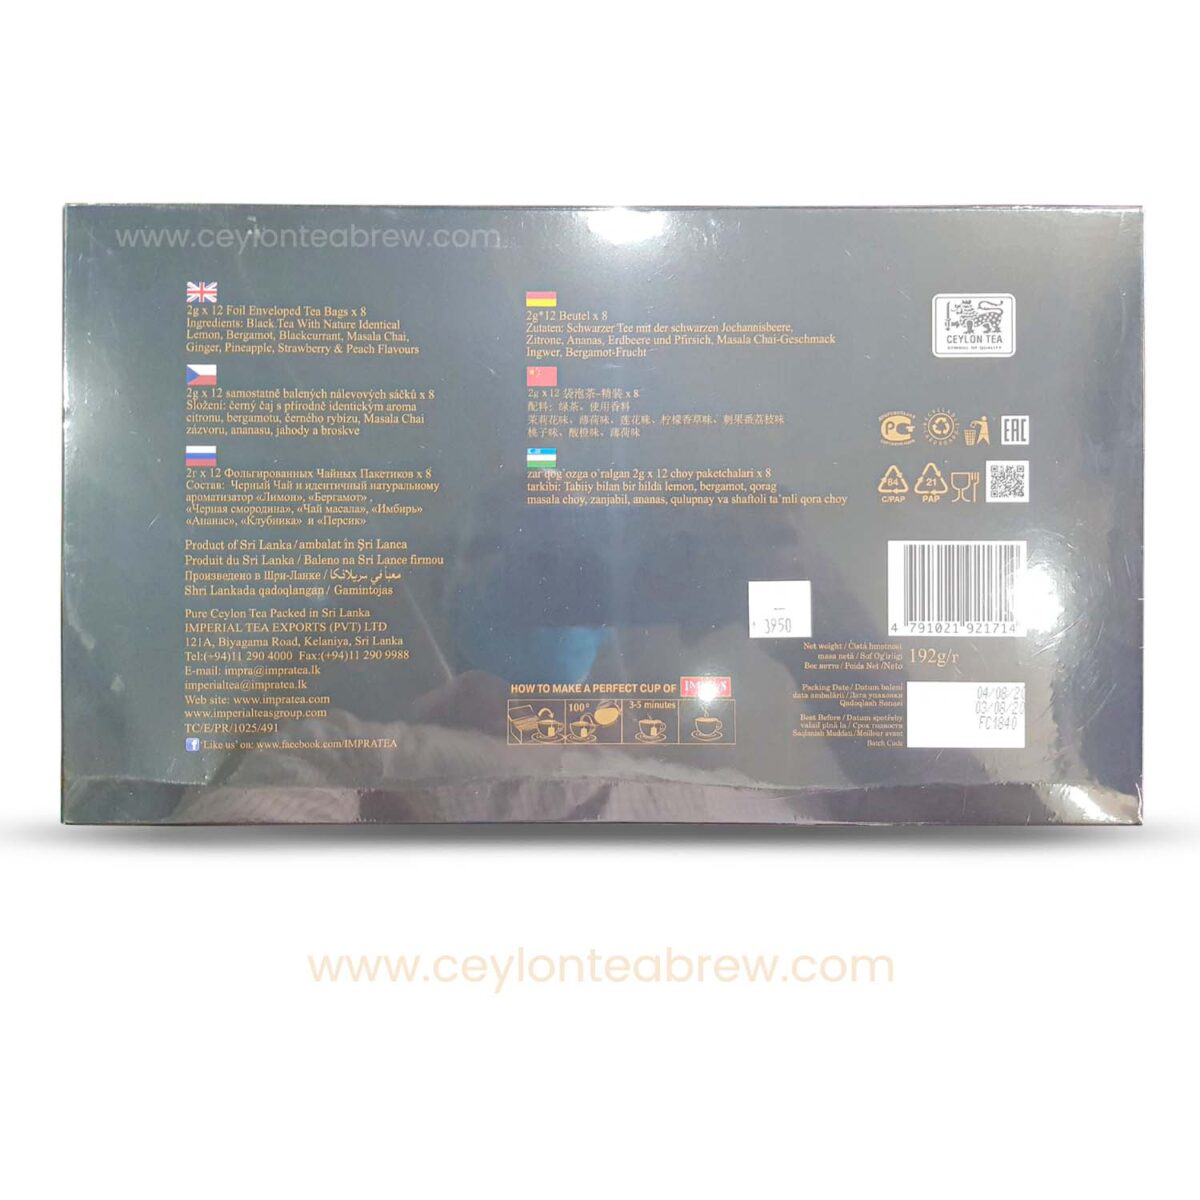 Impra Ceylon multi tea flavors gift assortment tea bags